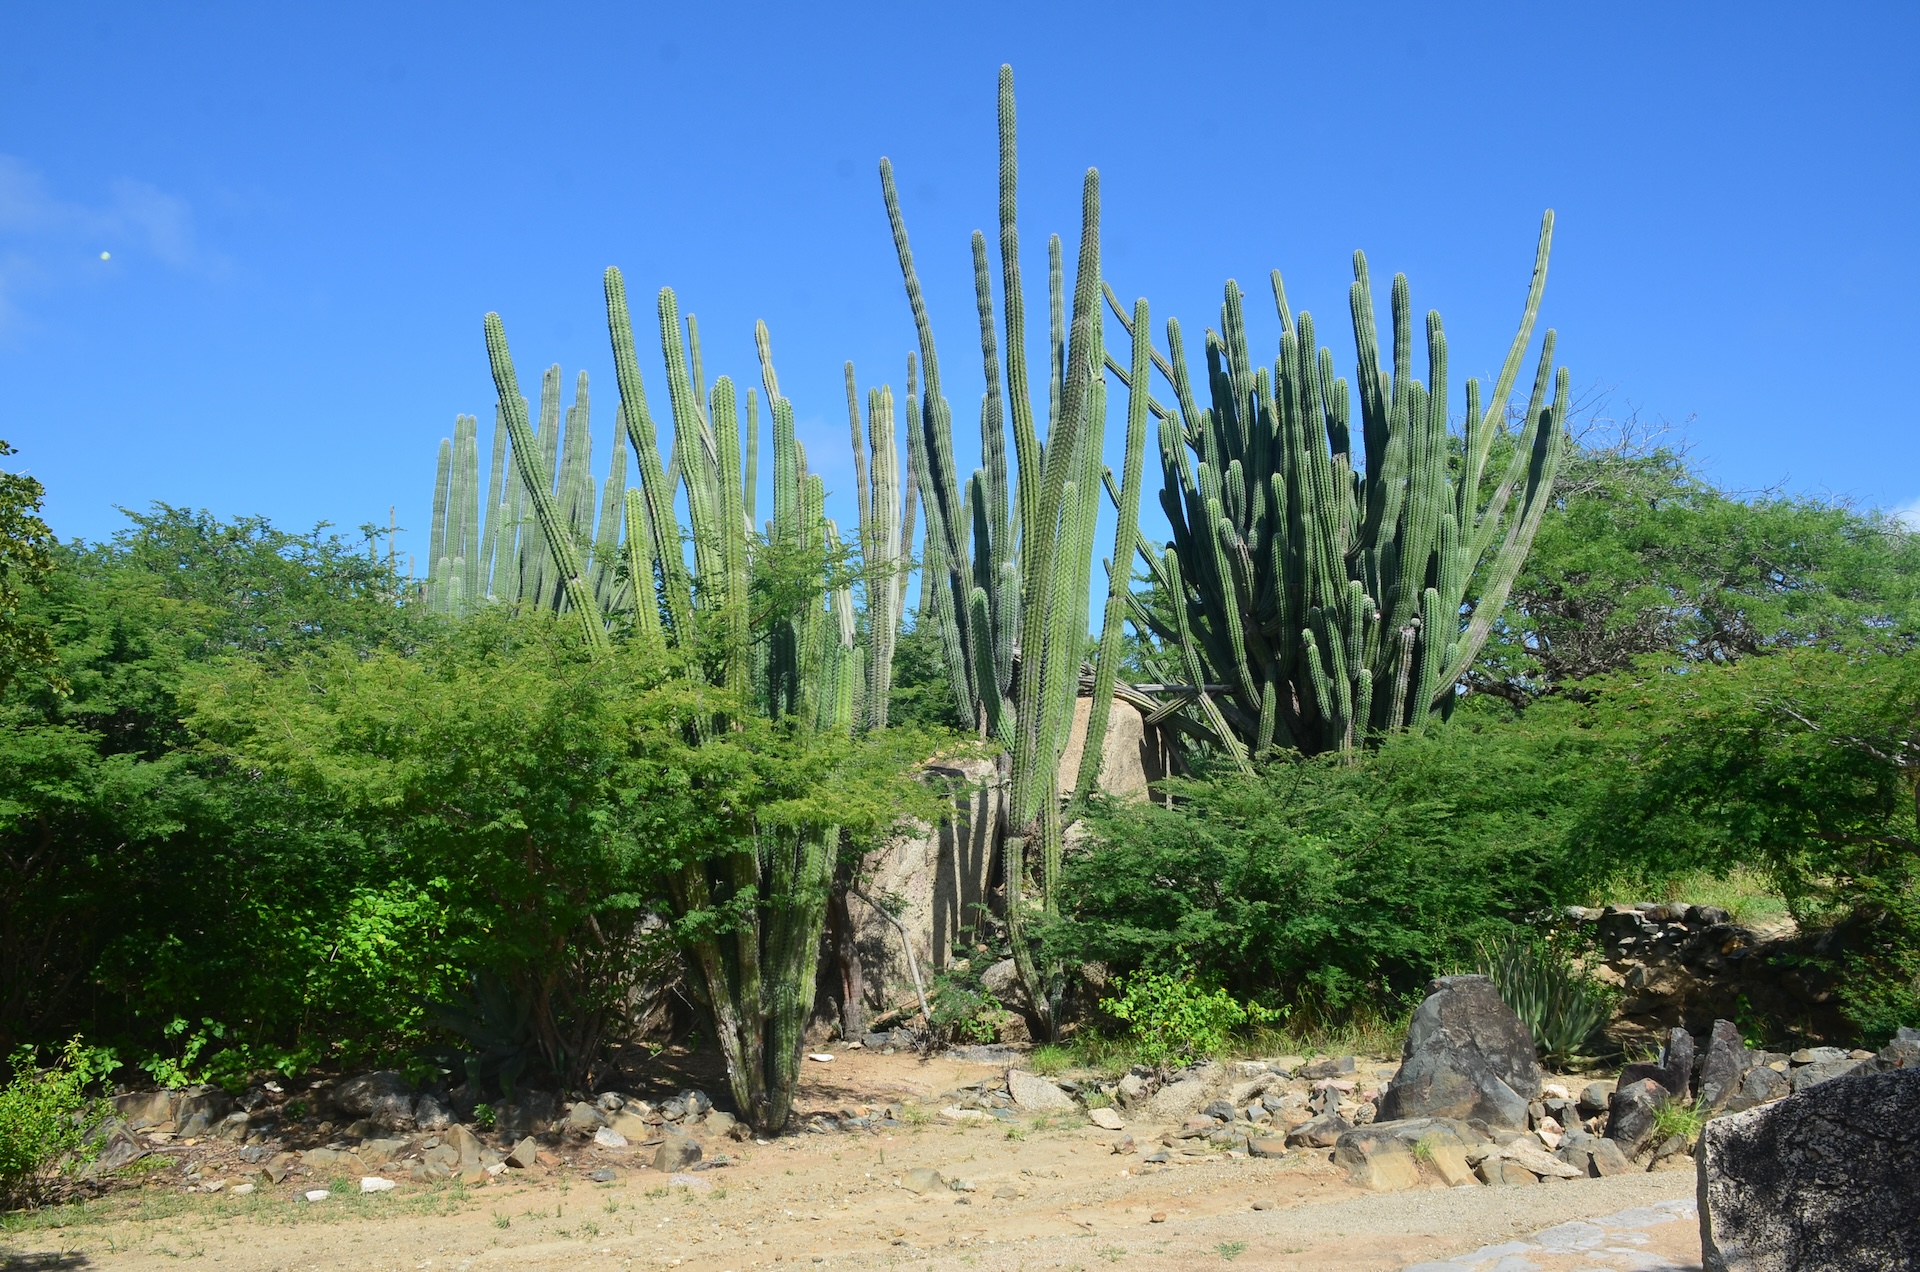 Cacti at the Ayo Rock Formations